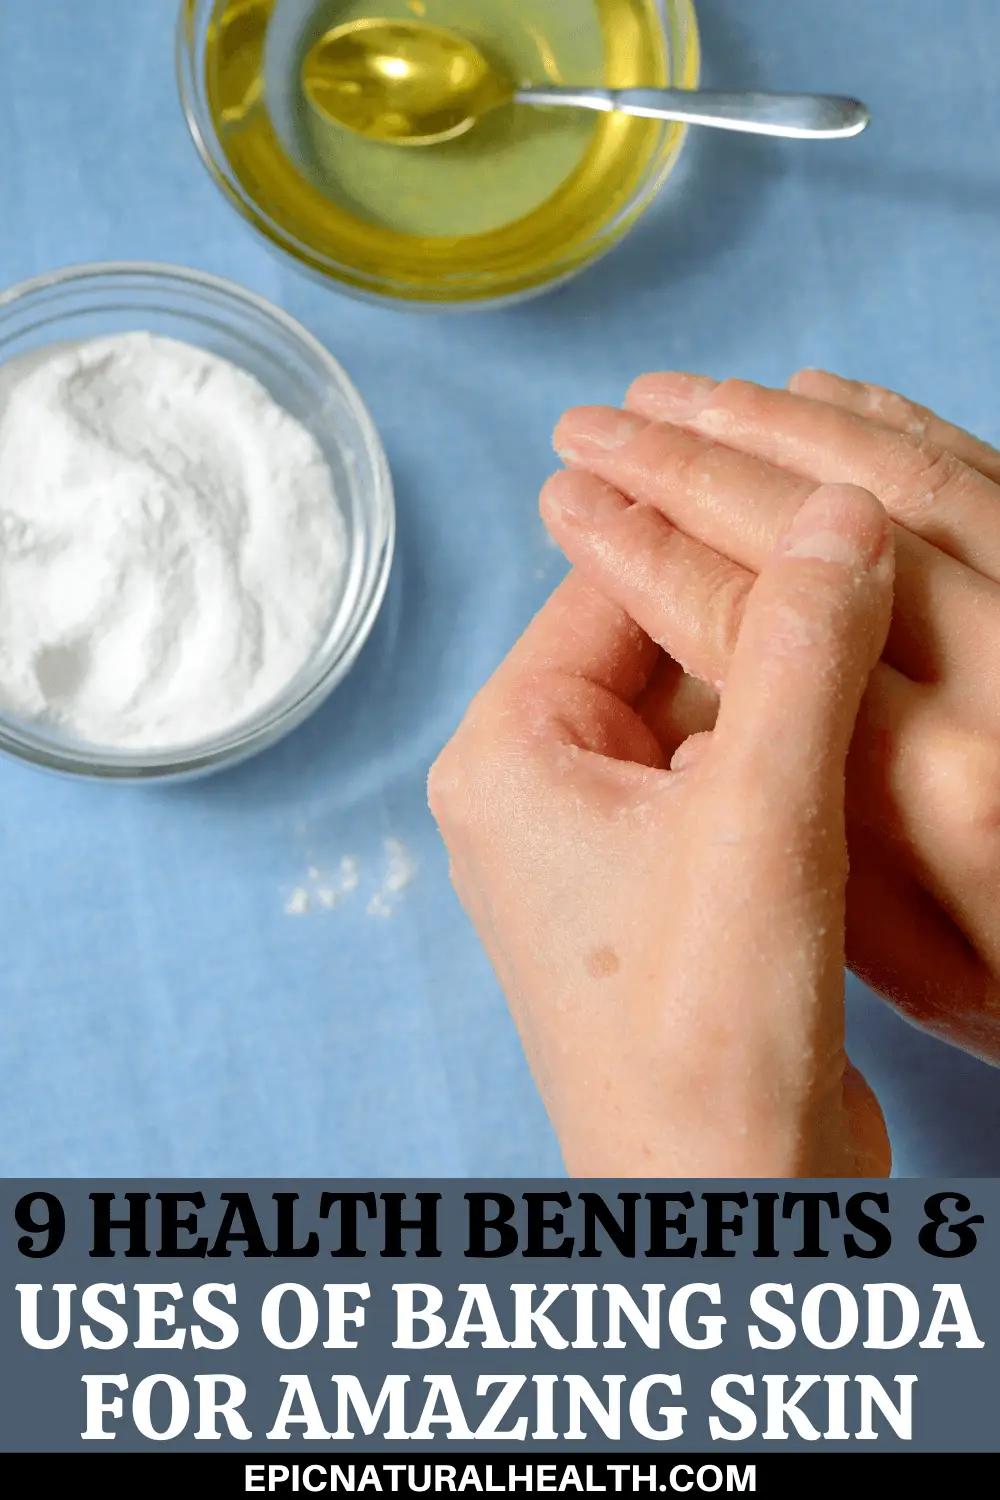 9 health benefits & uses of baking soda for amazing skin